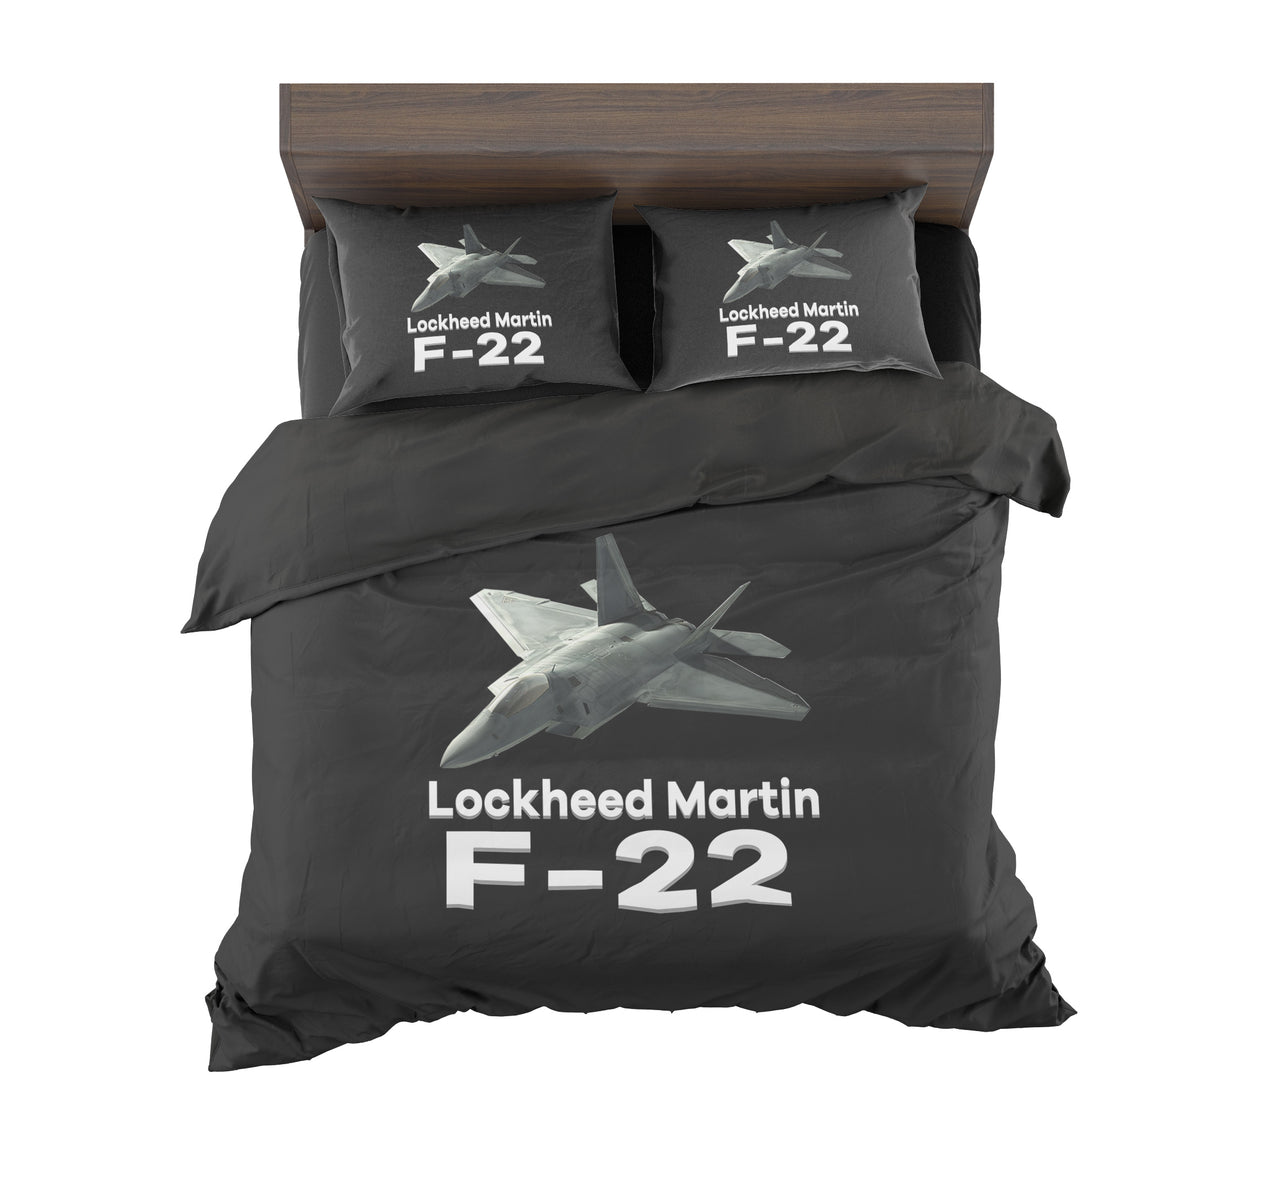 The Lockheed Martin F22 Designed Bedding Sets